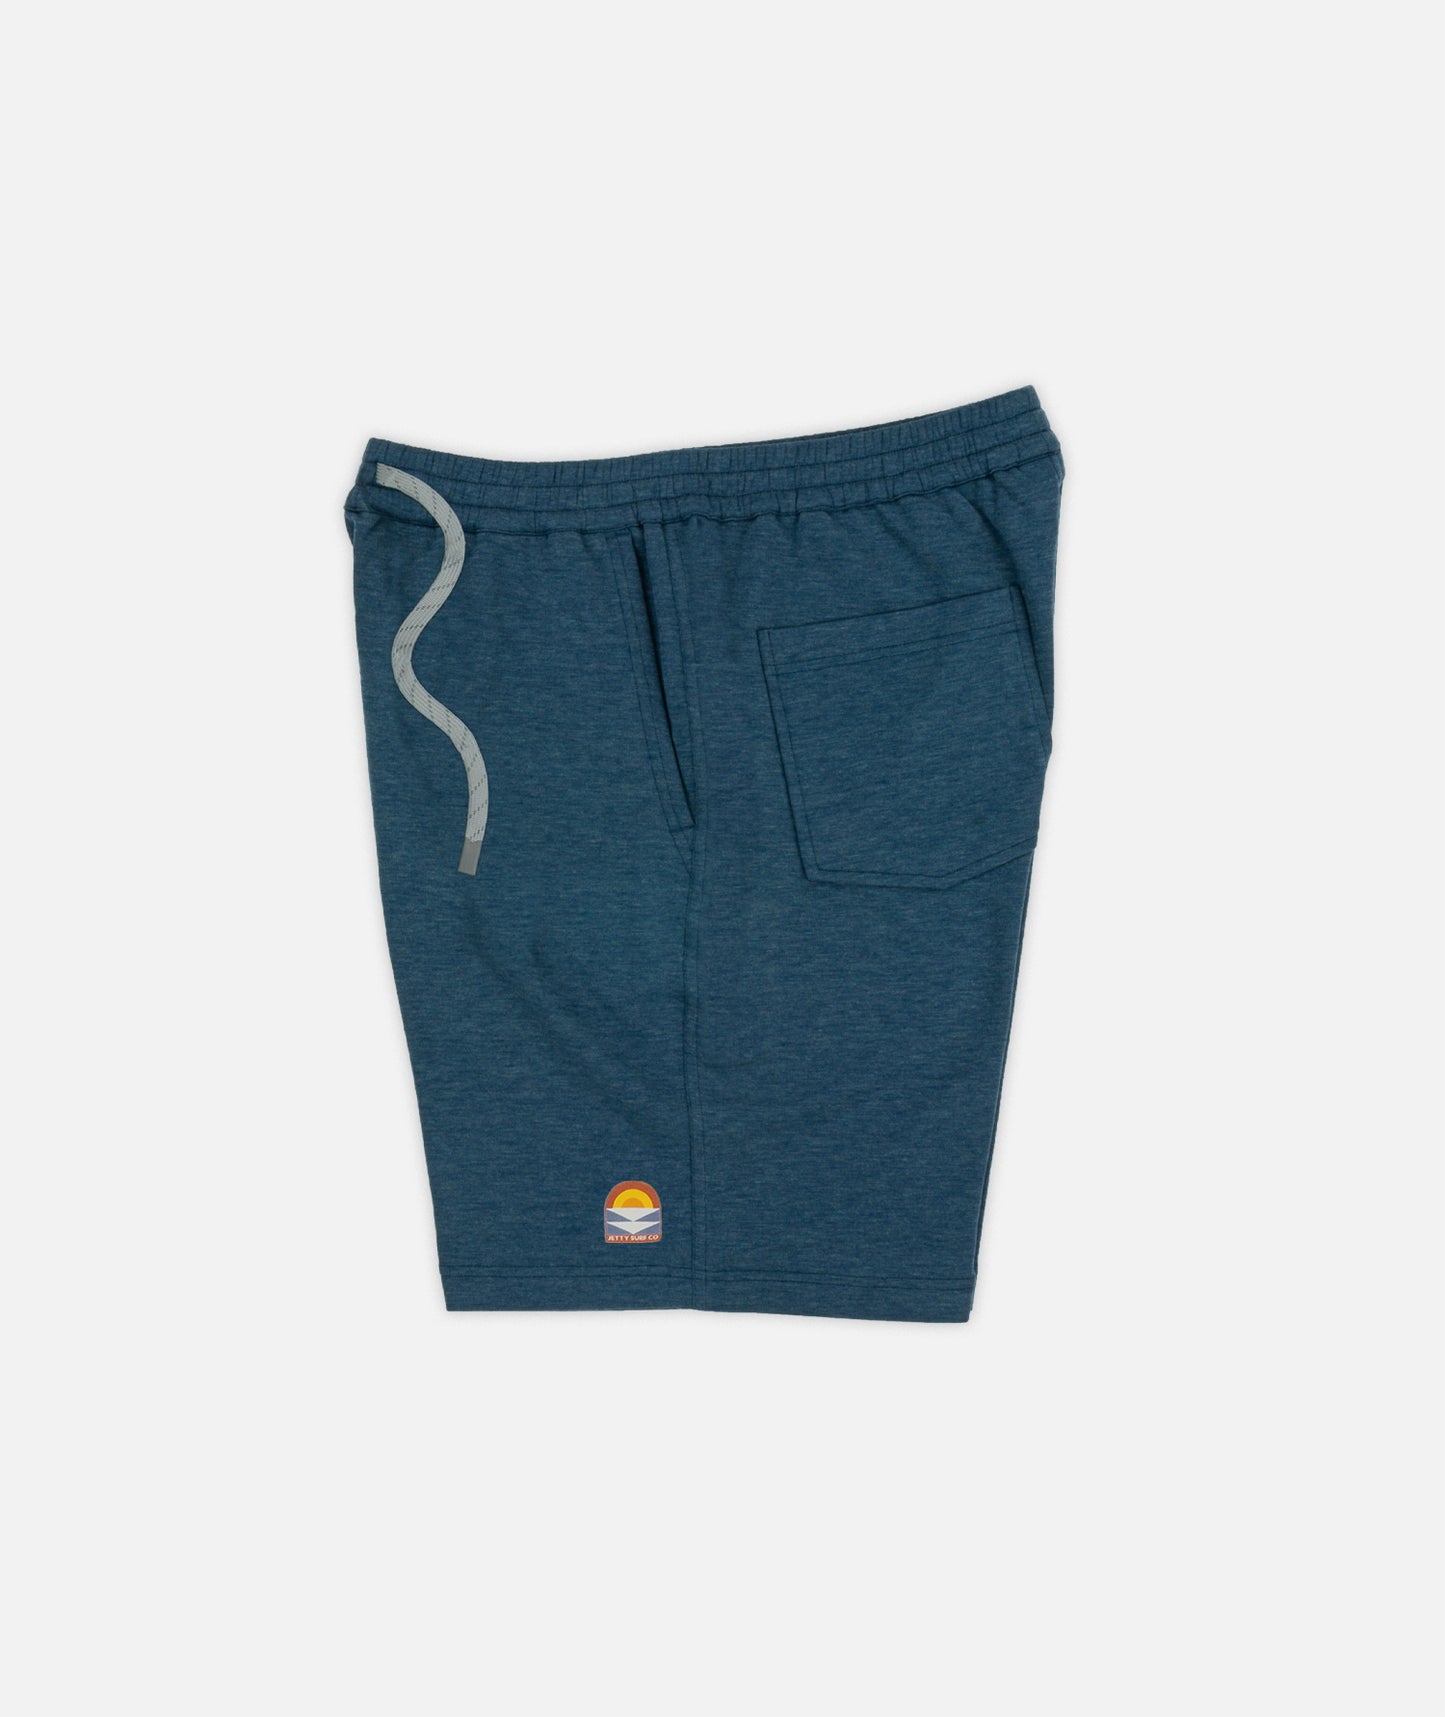 Pantalón corto Skipper Lounge - Azul marino 